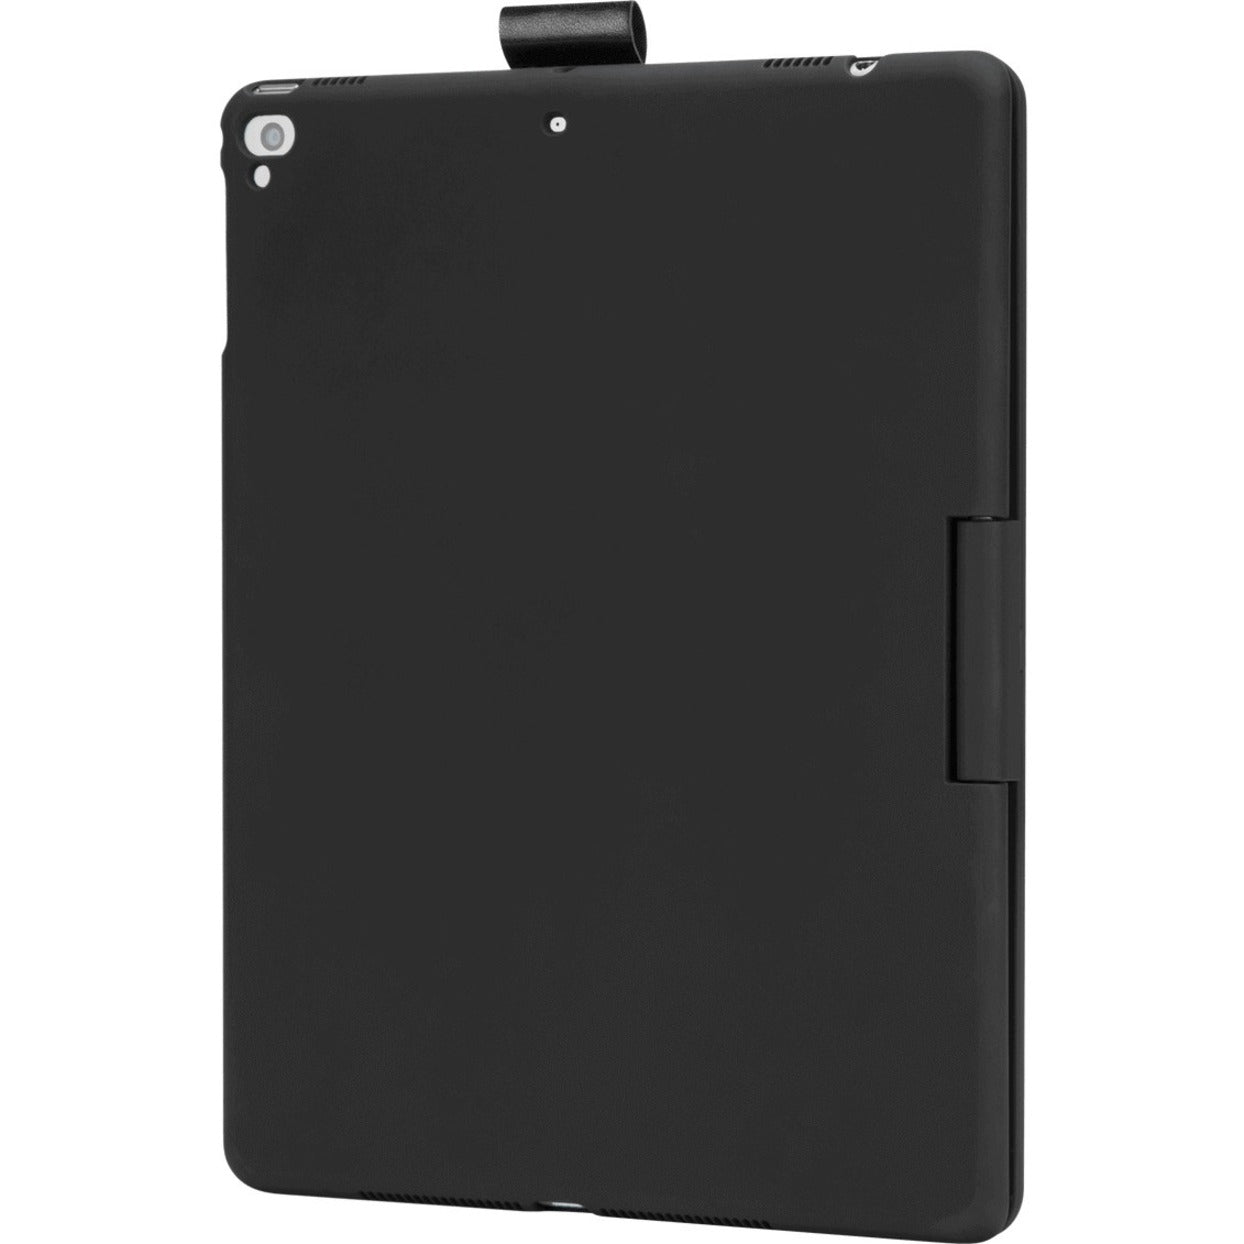 Targus THZ857US VersaType For iPad (7th Gen.) 10.2-inch, iPad Air 10.5-inch, iPad Pro 10.5-inch Keyboard/Cover Case